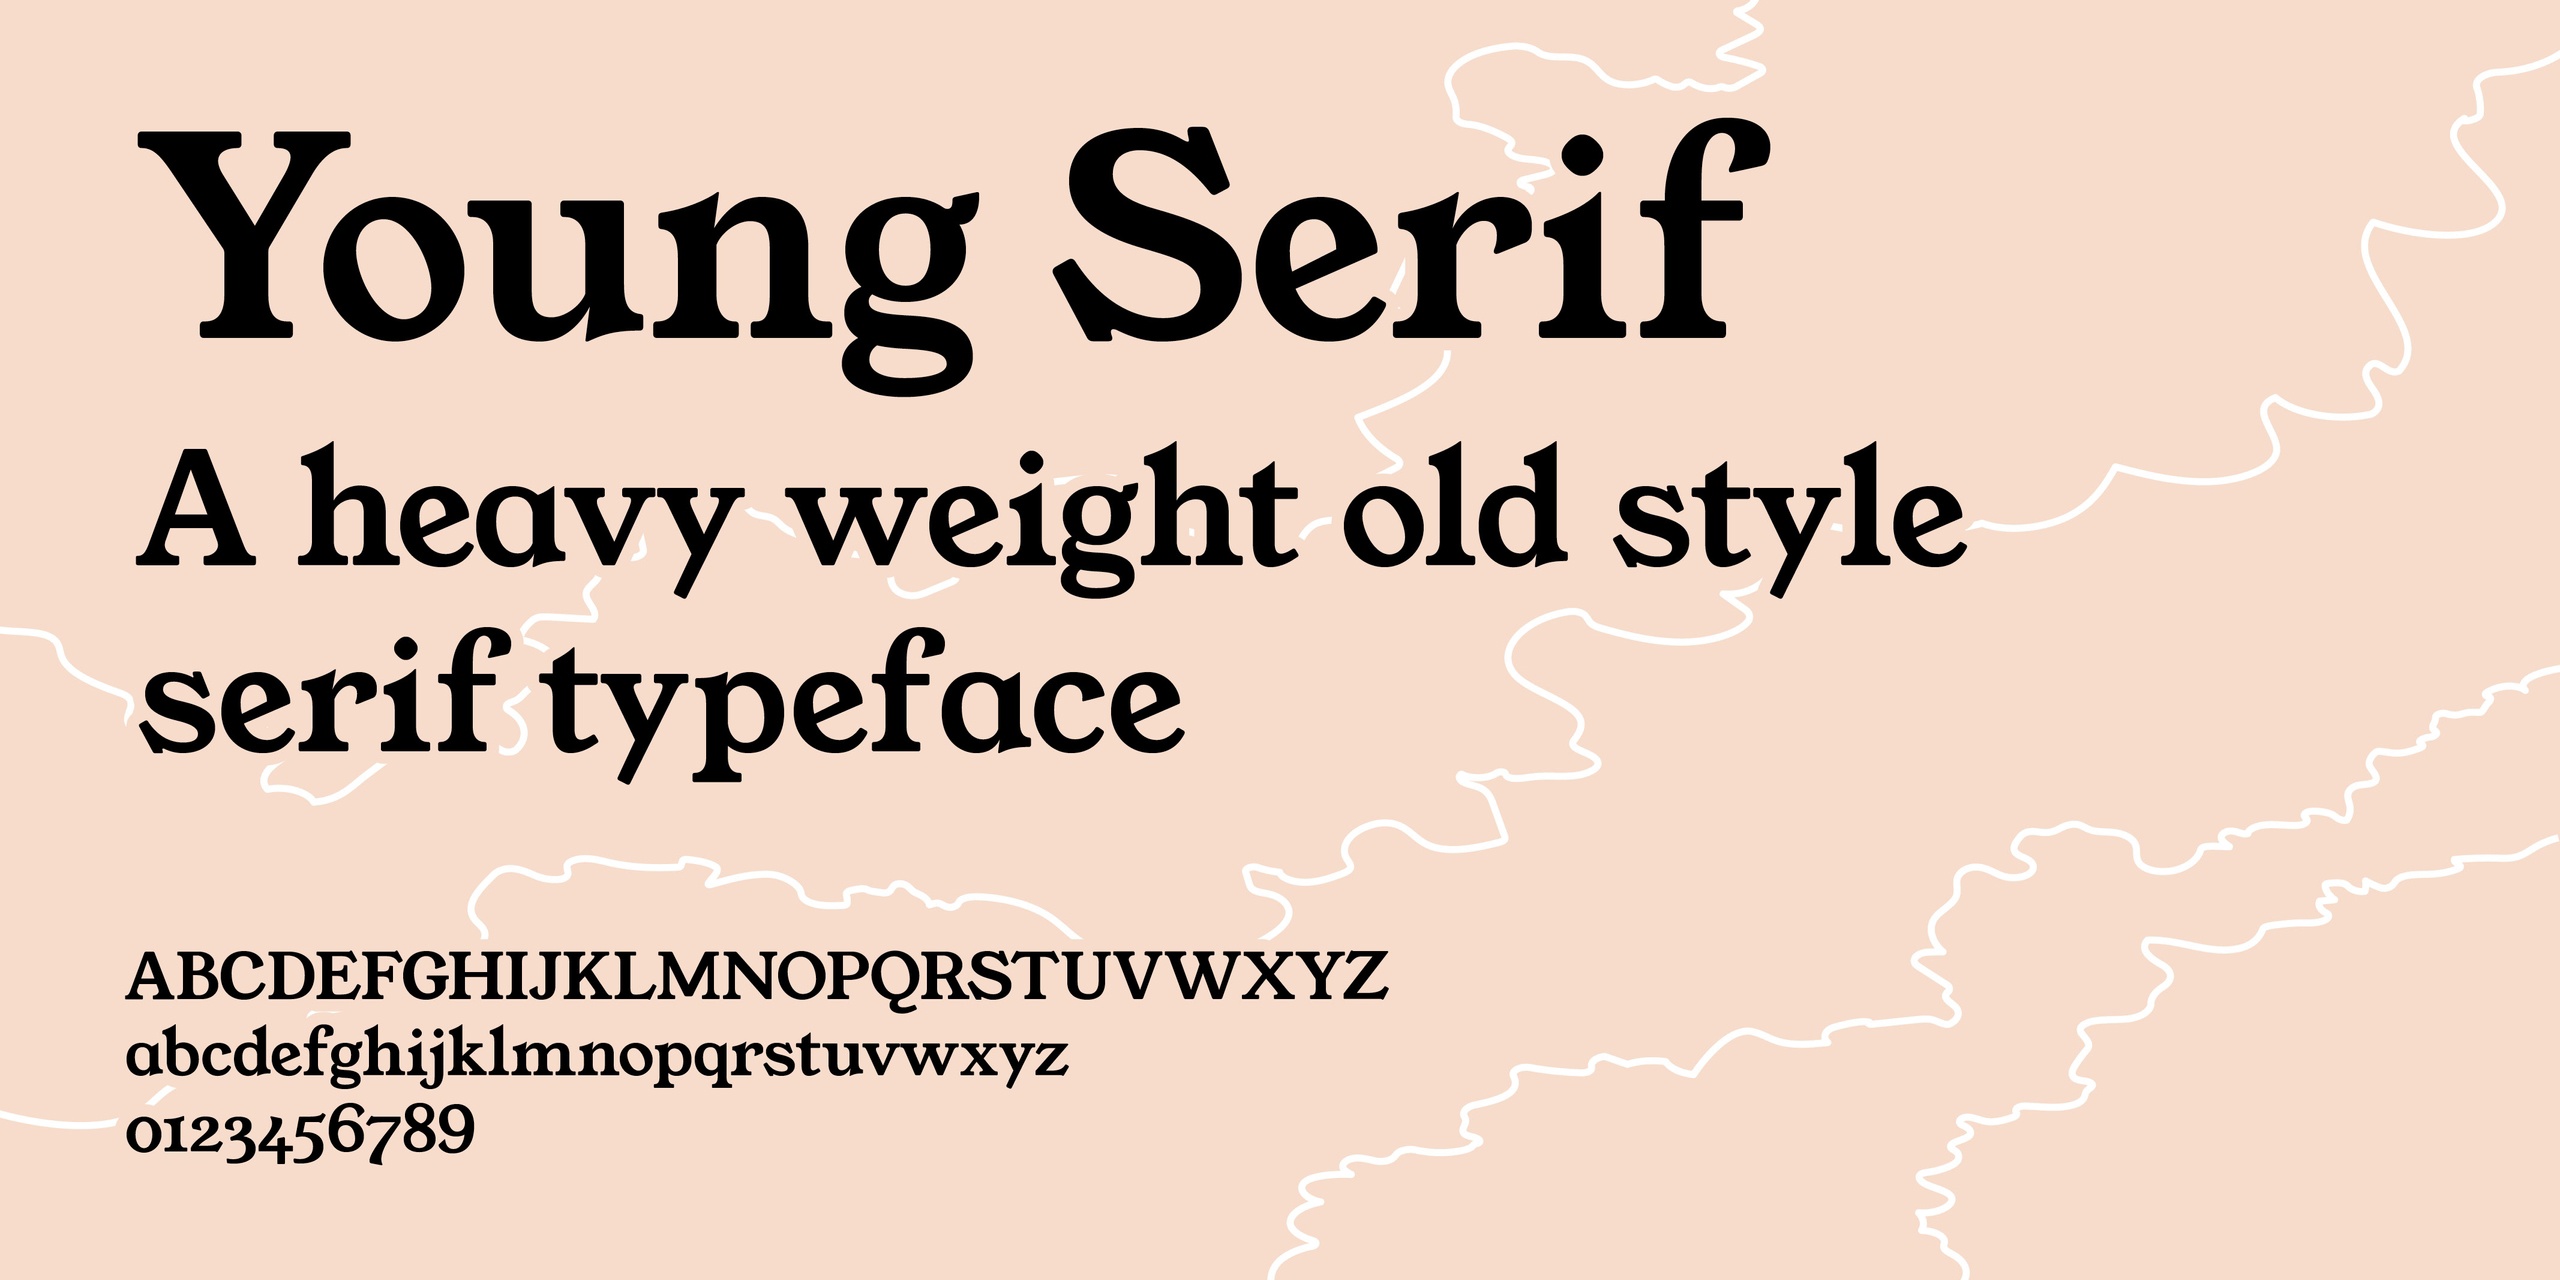 Font Young Serif